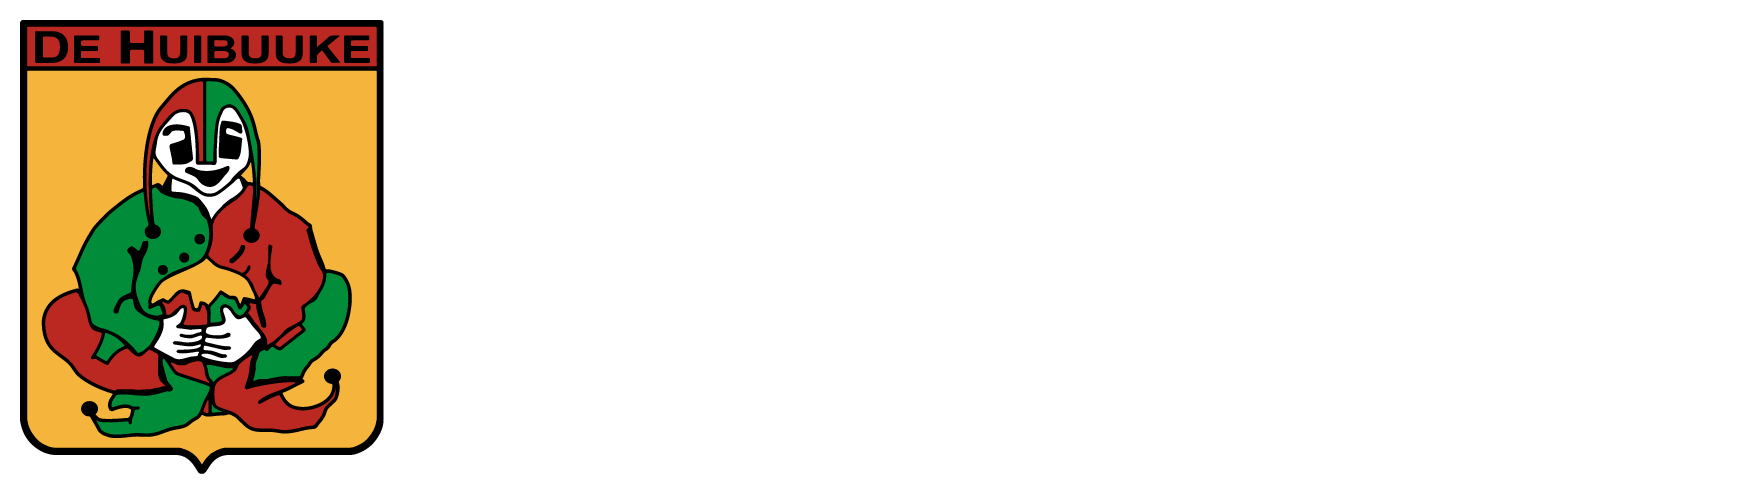 Stichting De Huibuuke